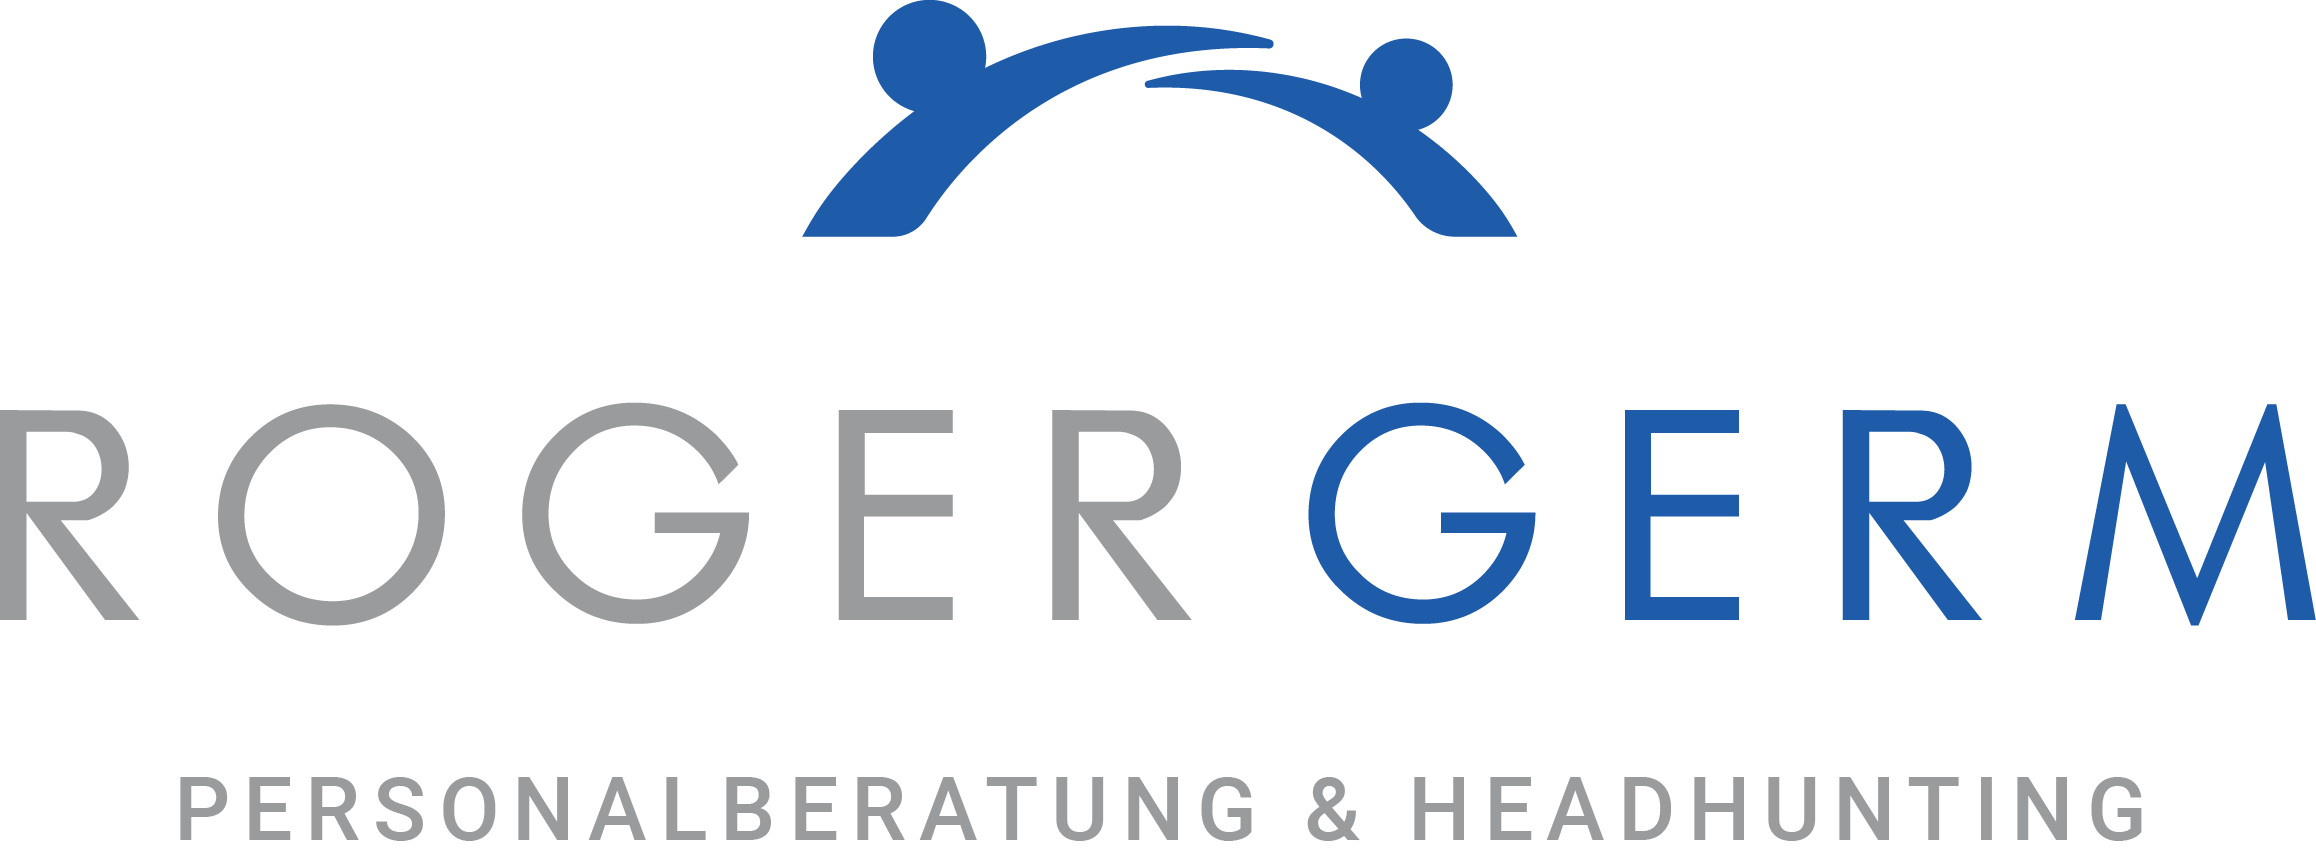 rg logo web